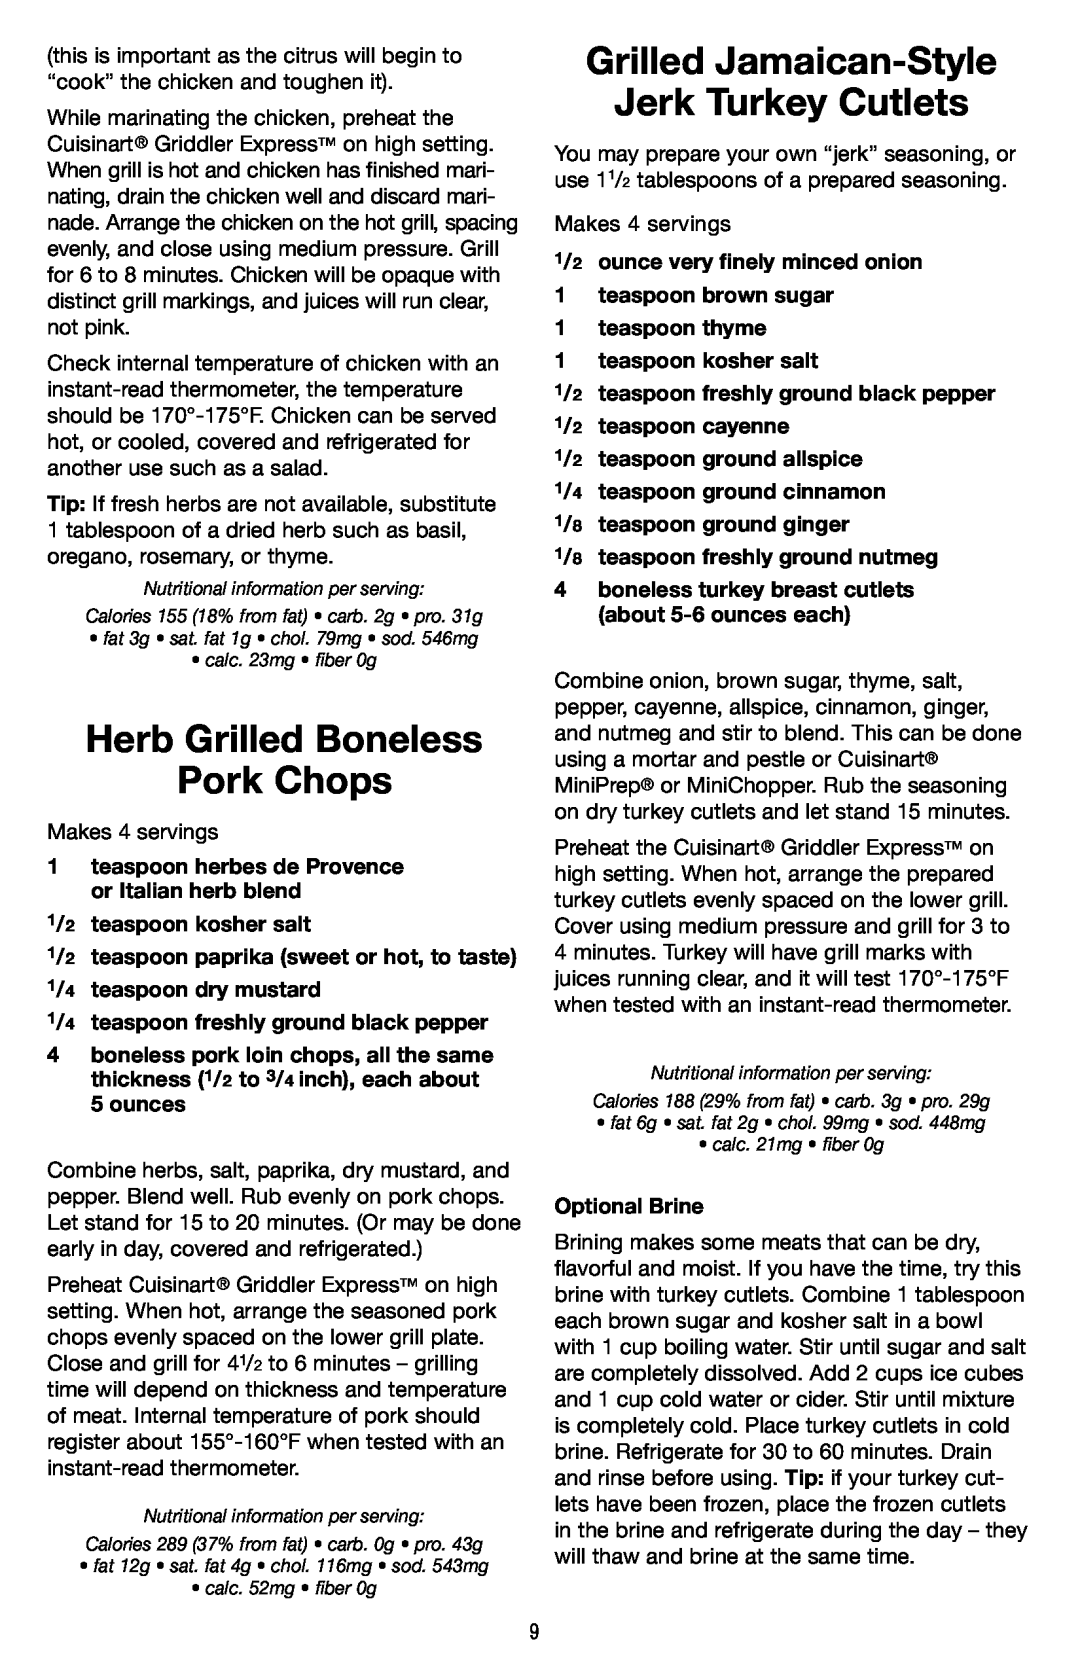 Cuisinart GR-2 manual Herb Grilled Boneless Pork Chops, Grilled Jamaican-Style Jerk Turkey Cutlets, Optional Brine 